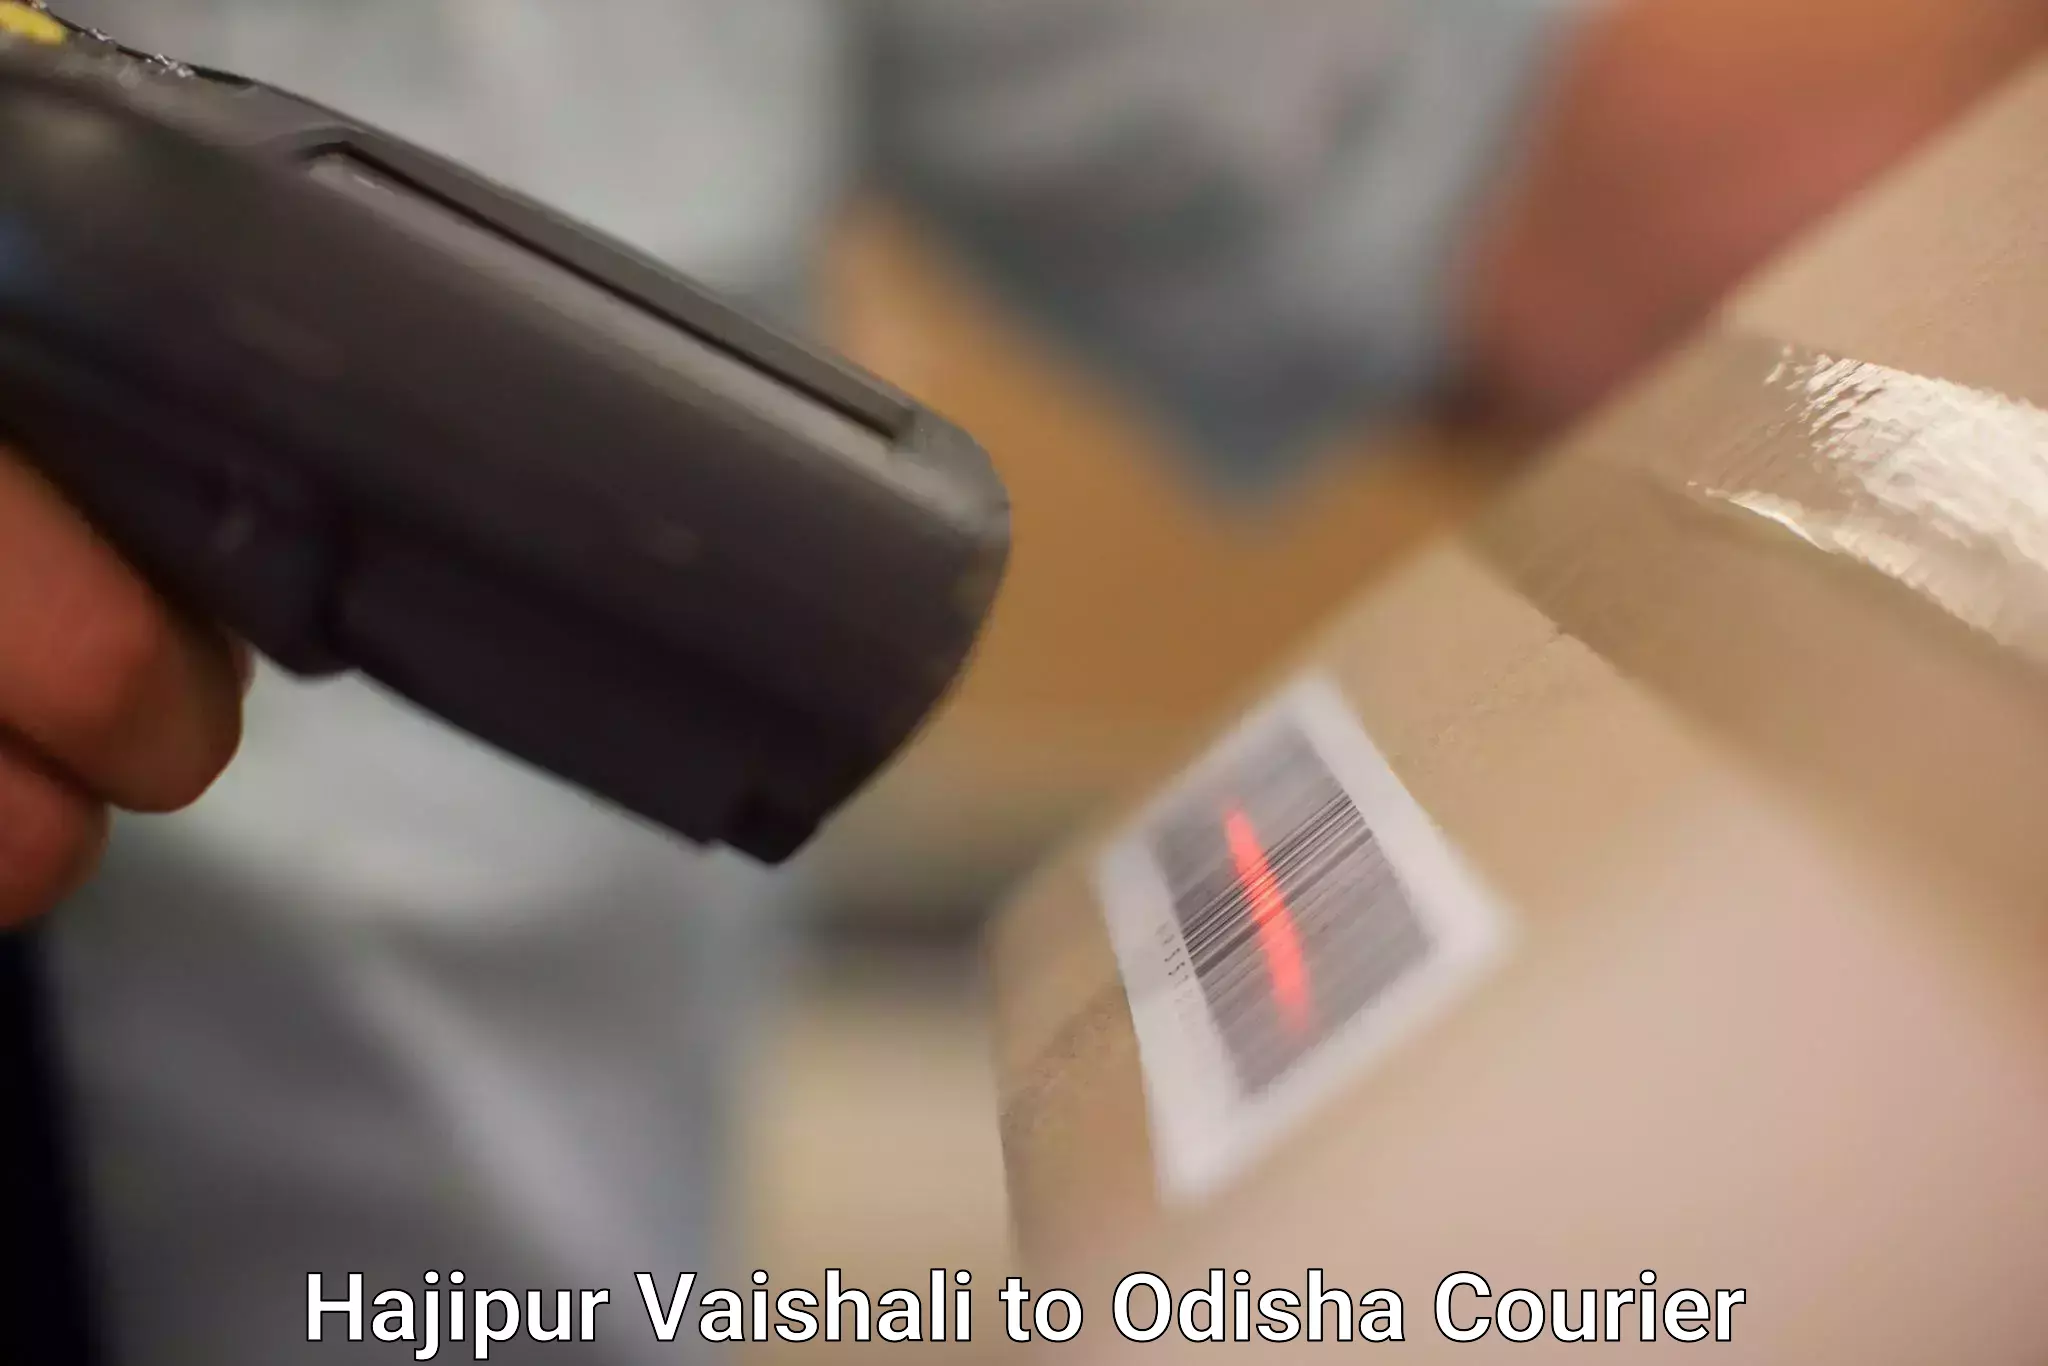 Courier service booking Hajipur Vaishali to Puri